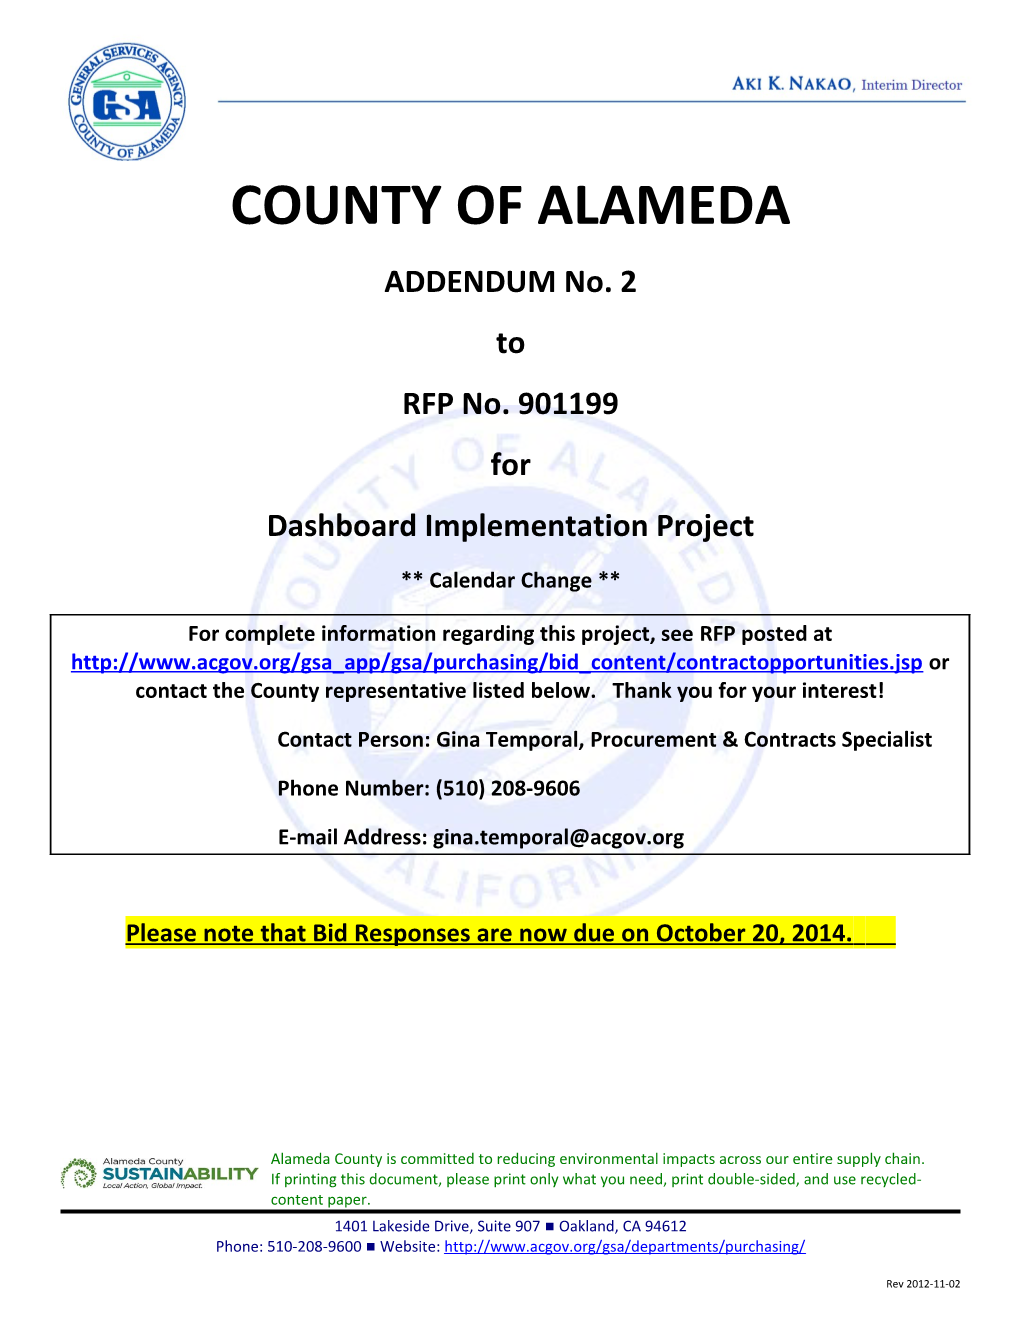 County of Alameda